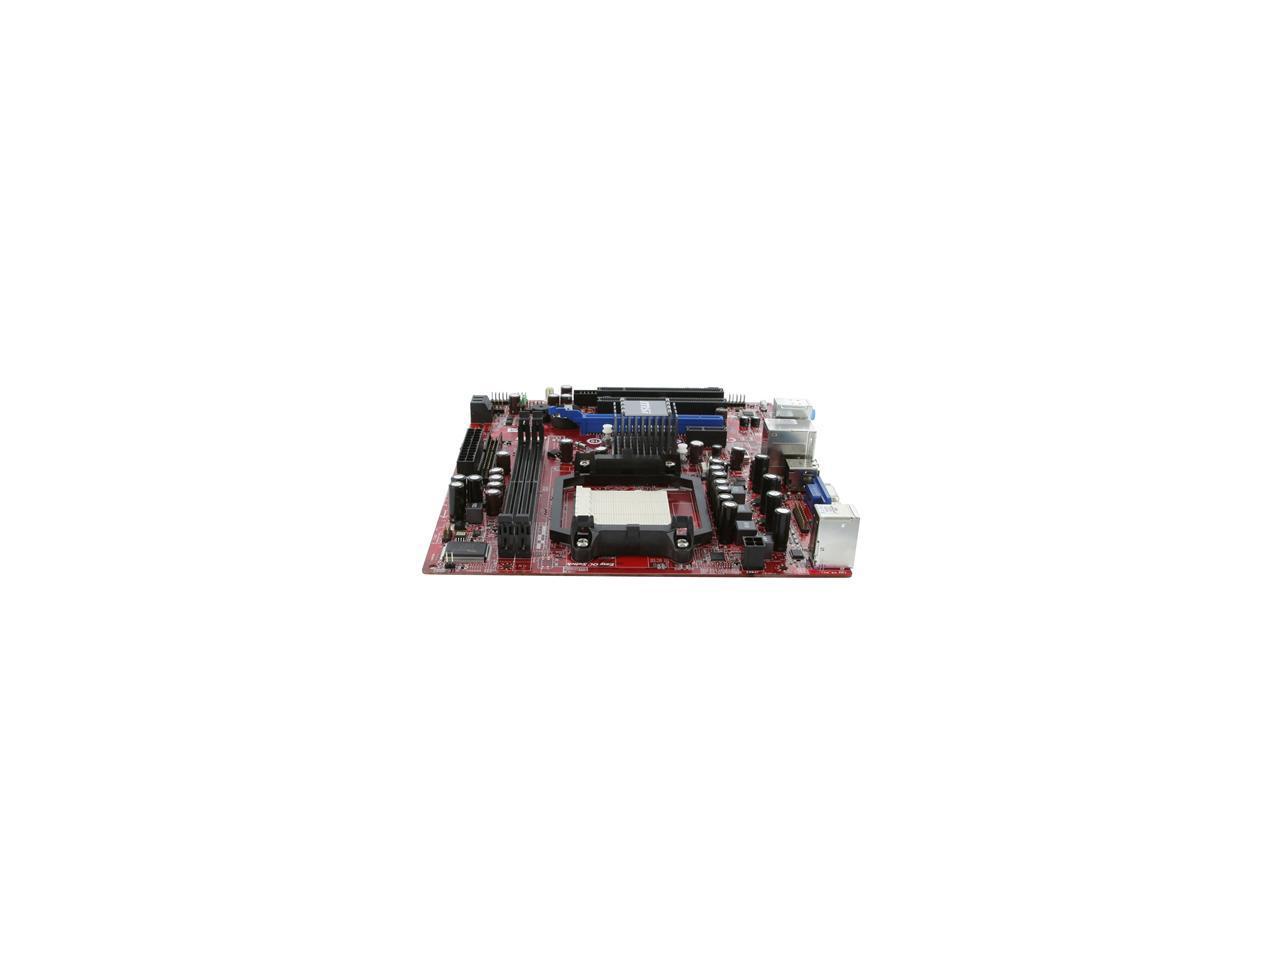 MSI K9N6PGM2-V2 AM3/AM2+/AM2 Micro ATX AMD Motherboard - Newegg.com